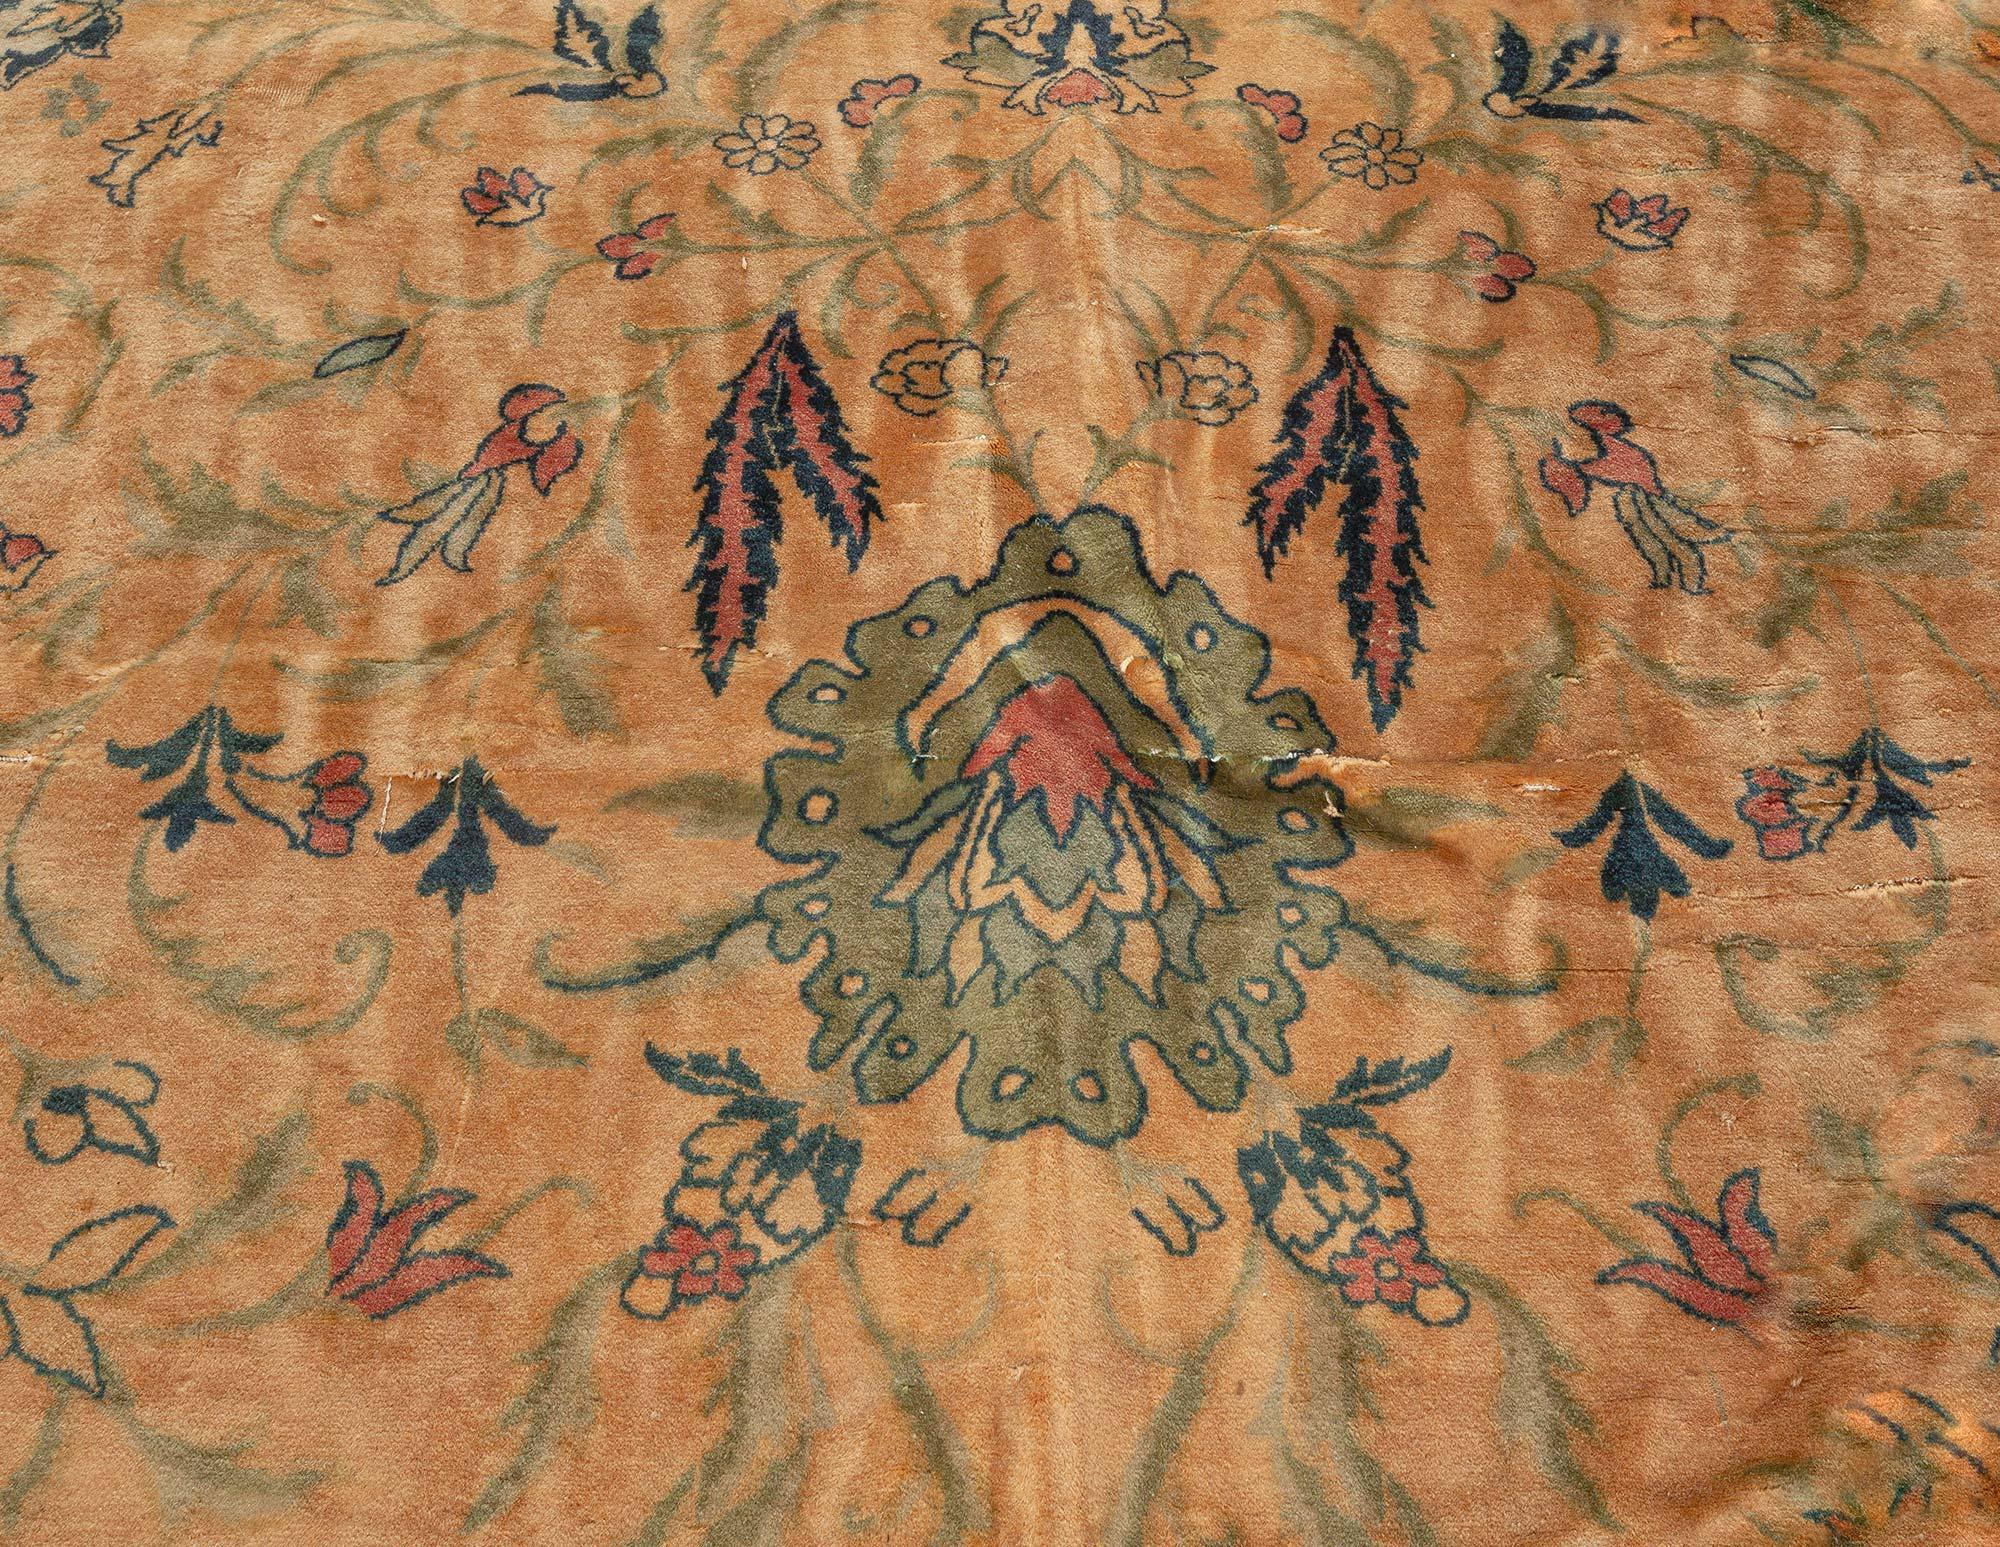 Oversized Antique Indian Handmade Wool Carpet (size adjusted)
Size: 14'8